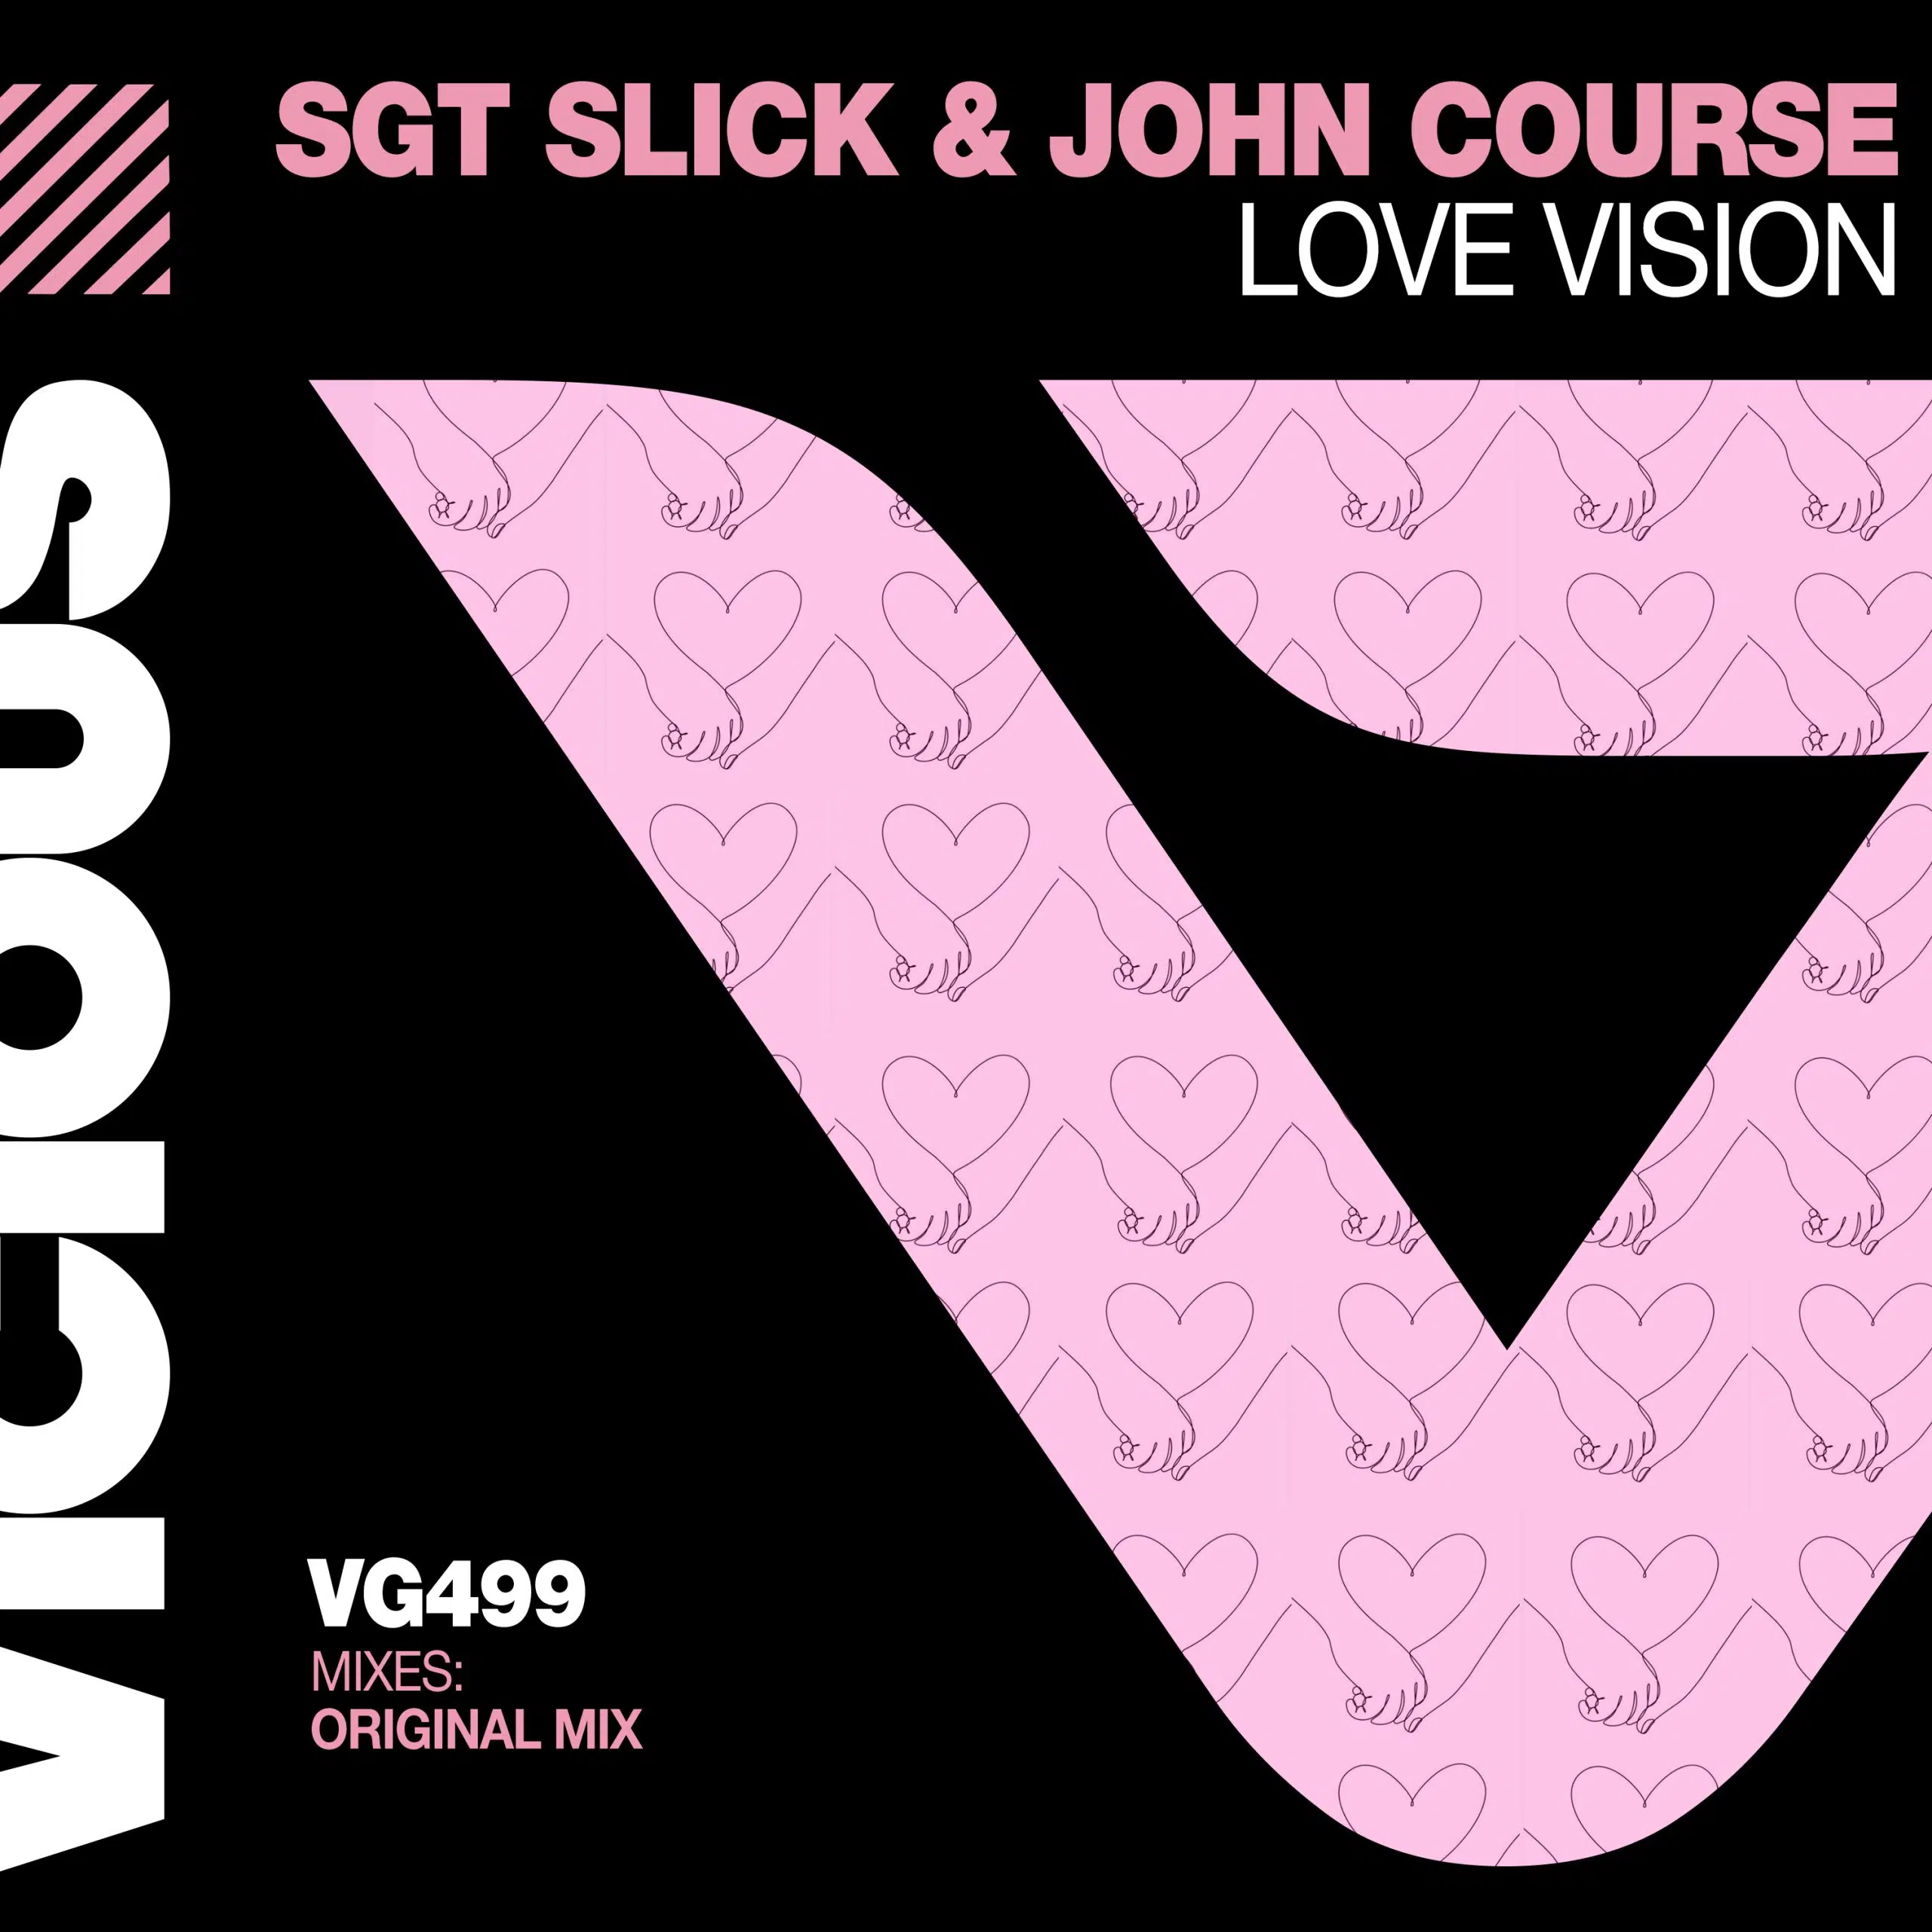 Sgt Slick & John Course “Love Vision”